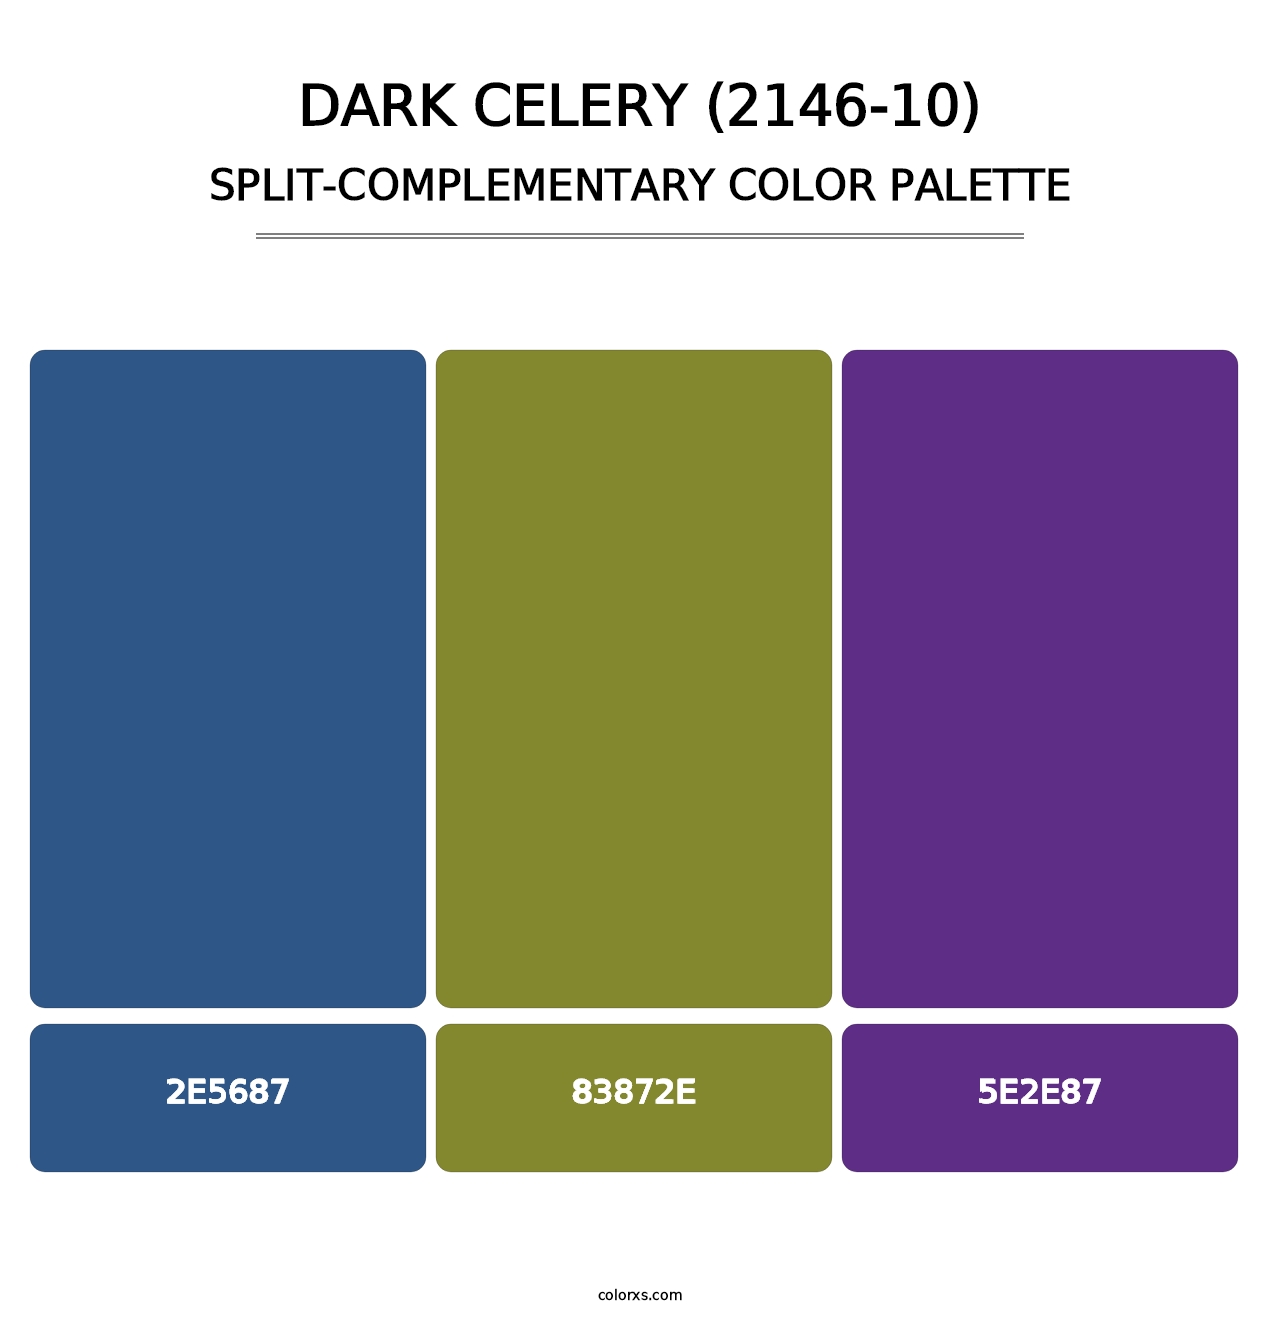 Dark Celery (2146-10) - Split-Complementary Color Palette